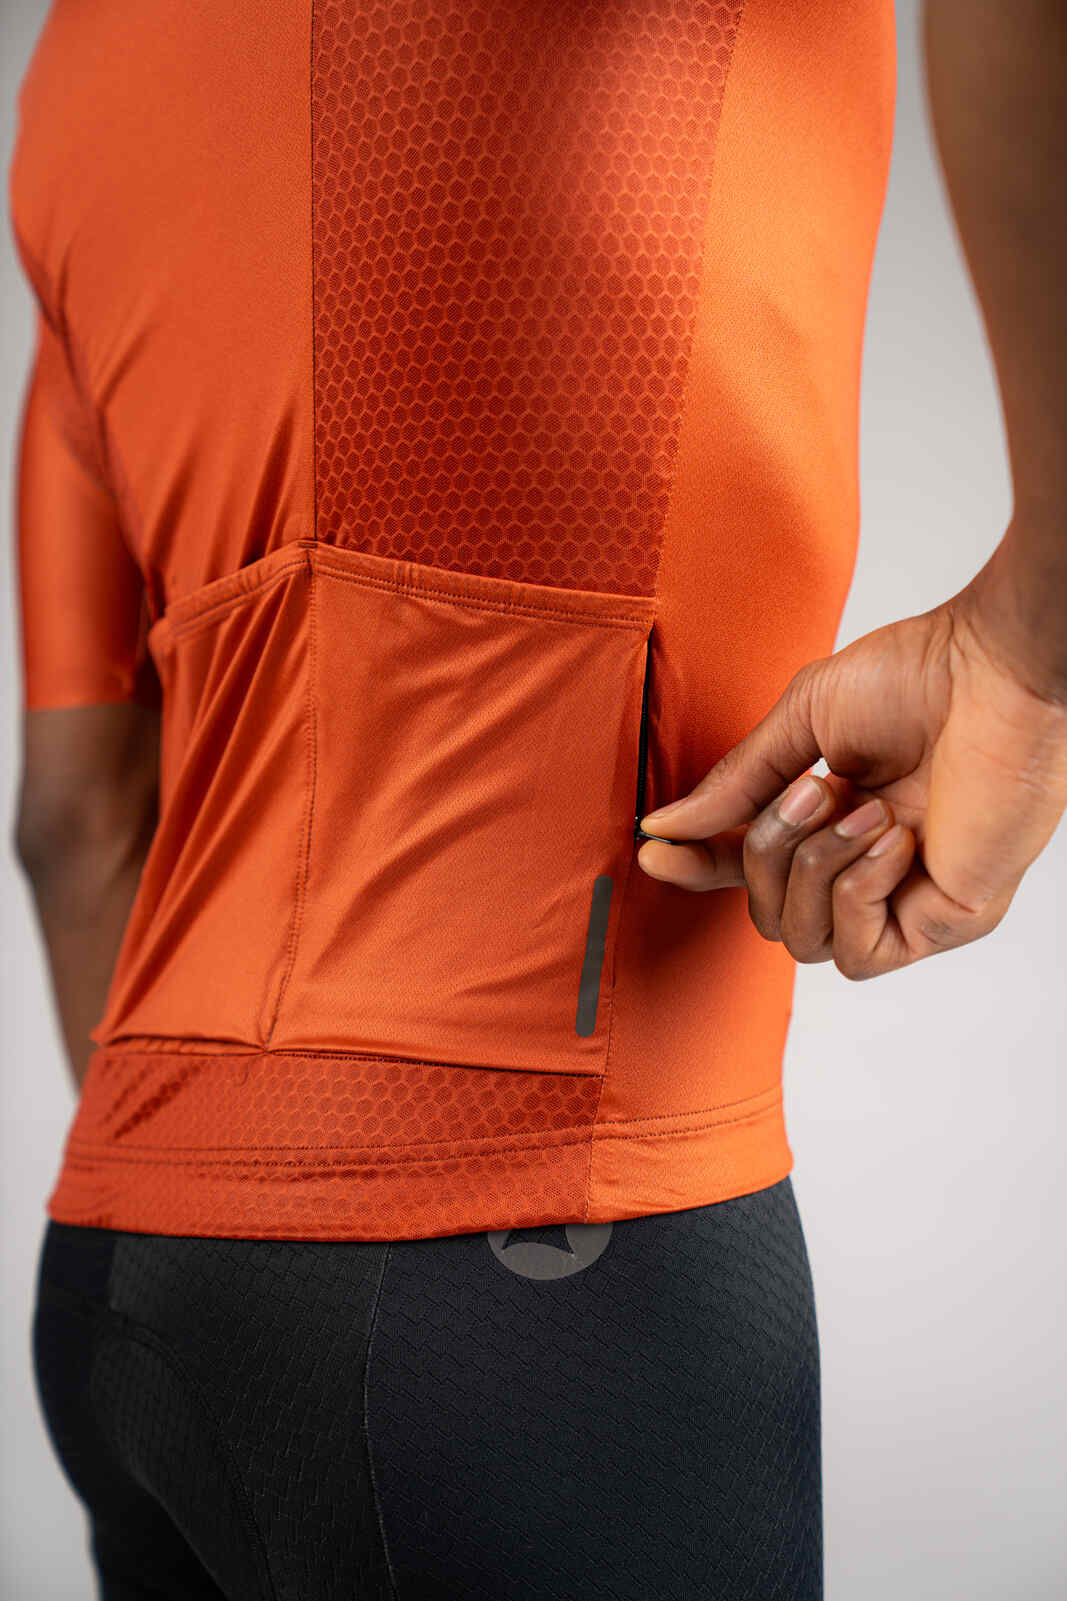 Men's Summit Aero Burnt Orange Cycling Jersey - Zippered Valuables Pocket